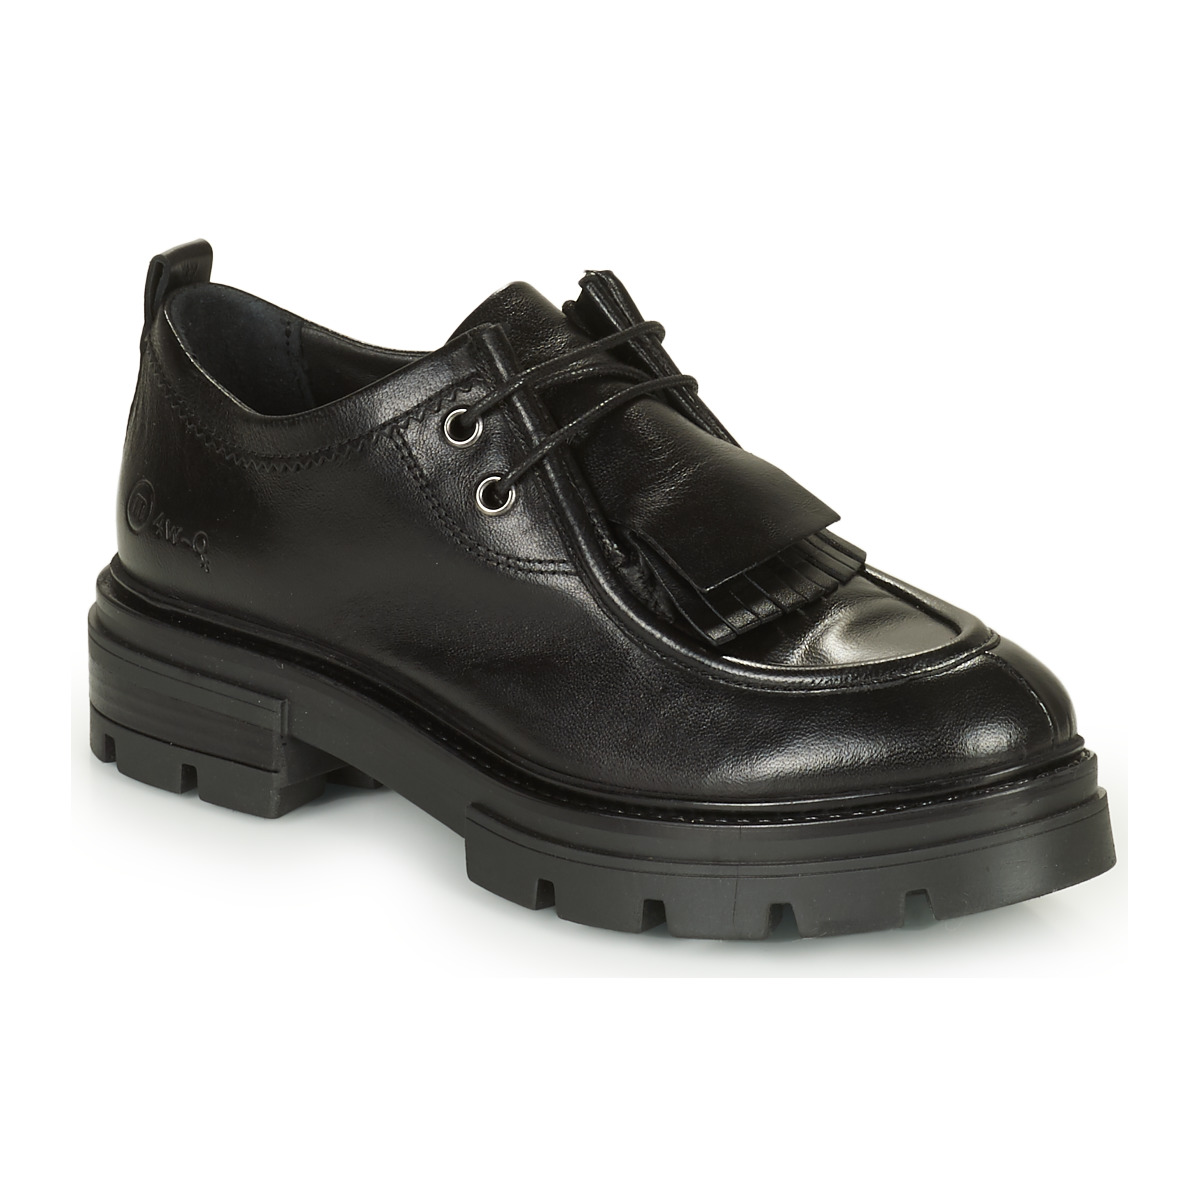 Cipők Női Oxford cipők Mjus BEATRIX DERBY Fekete 